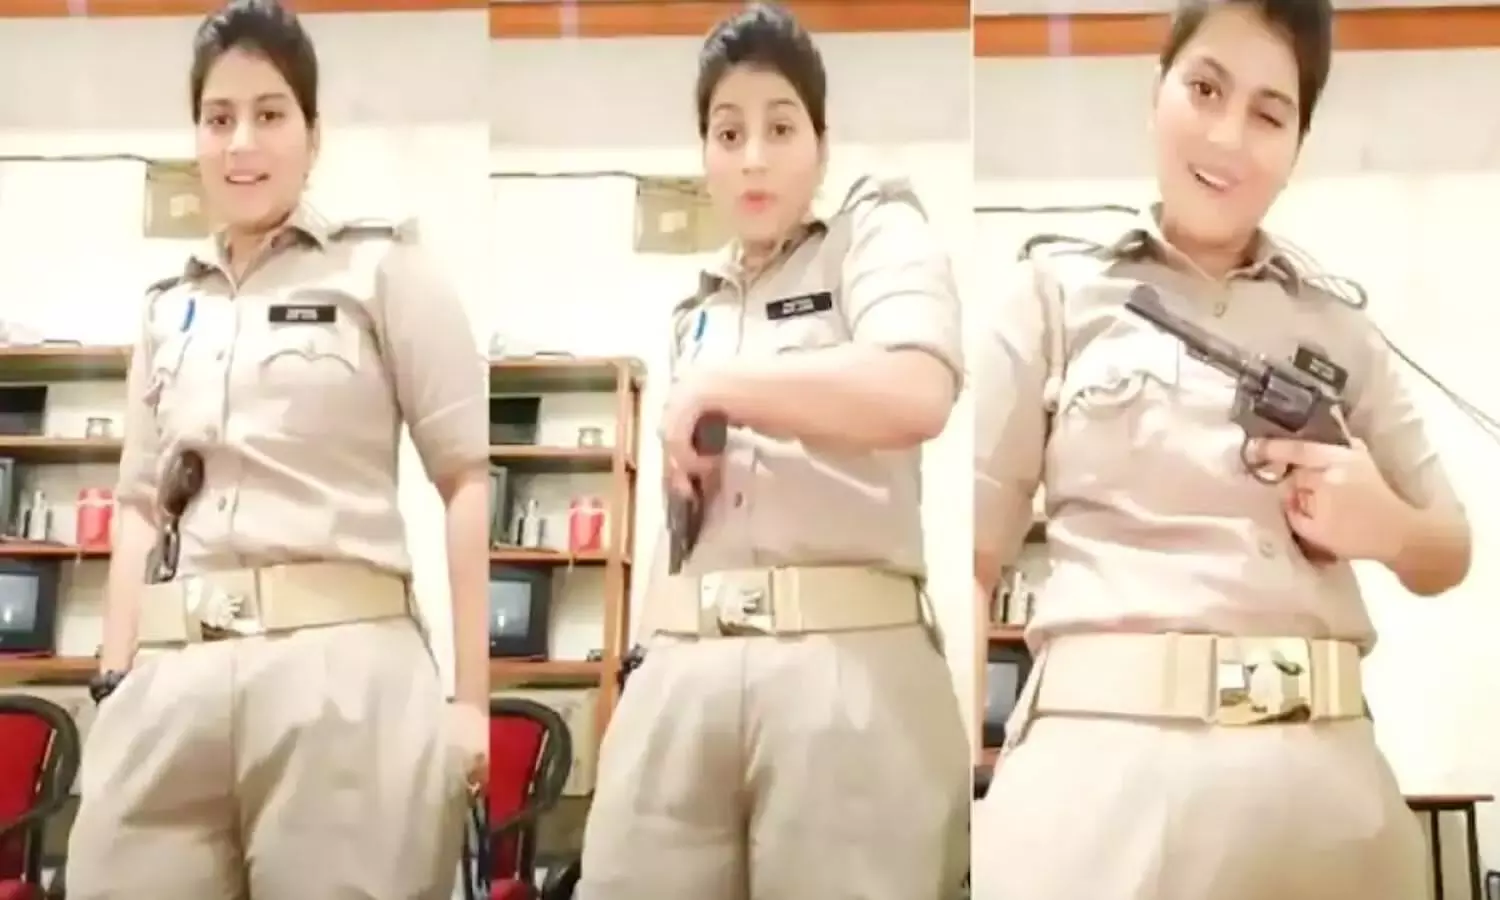 female constable is Priyanka Mishra